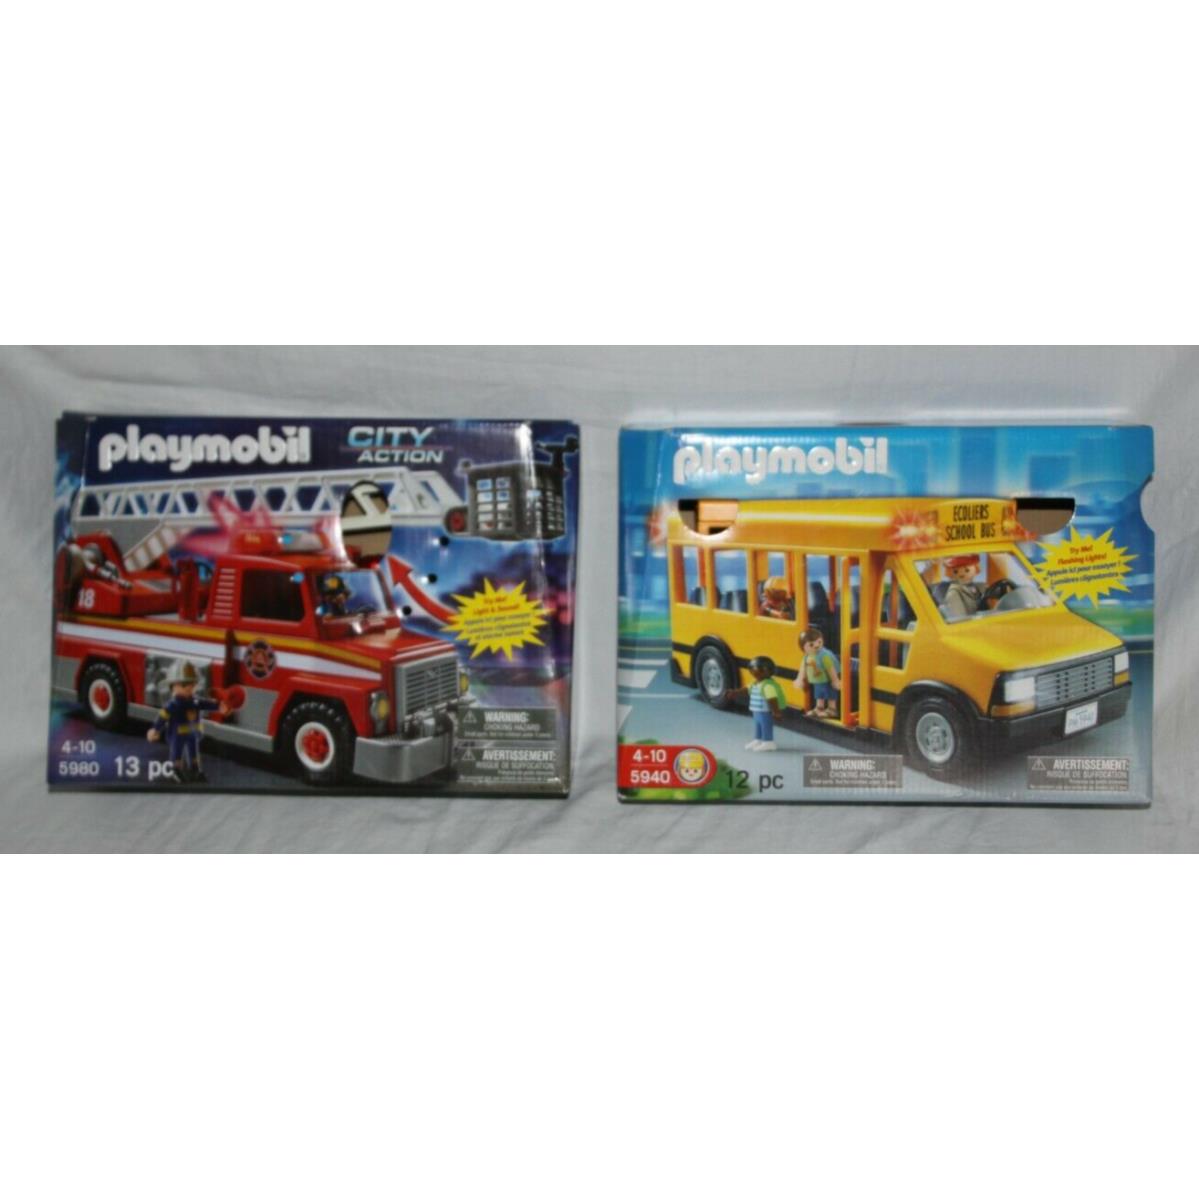 Playmobil 5940 School Bus People 5980 City Action Fire Truck Firemen